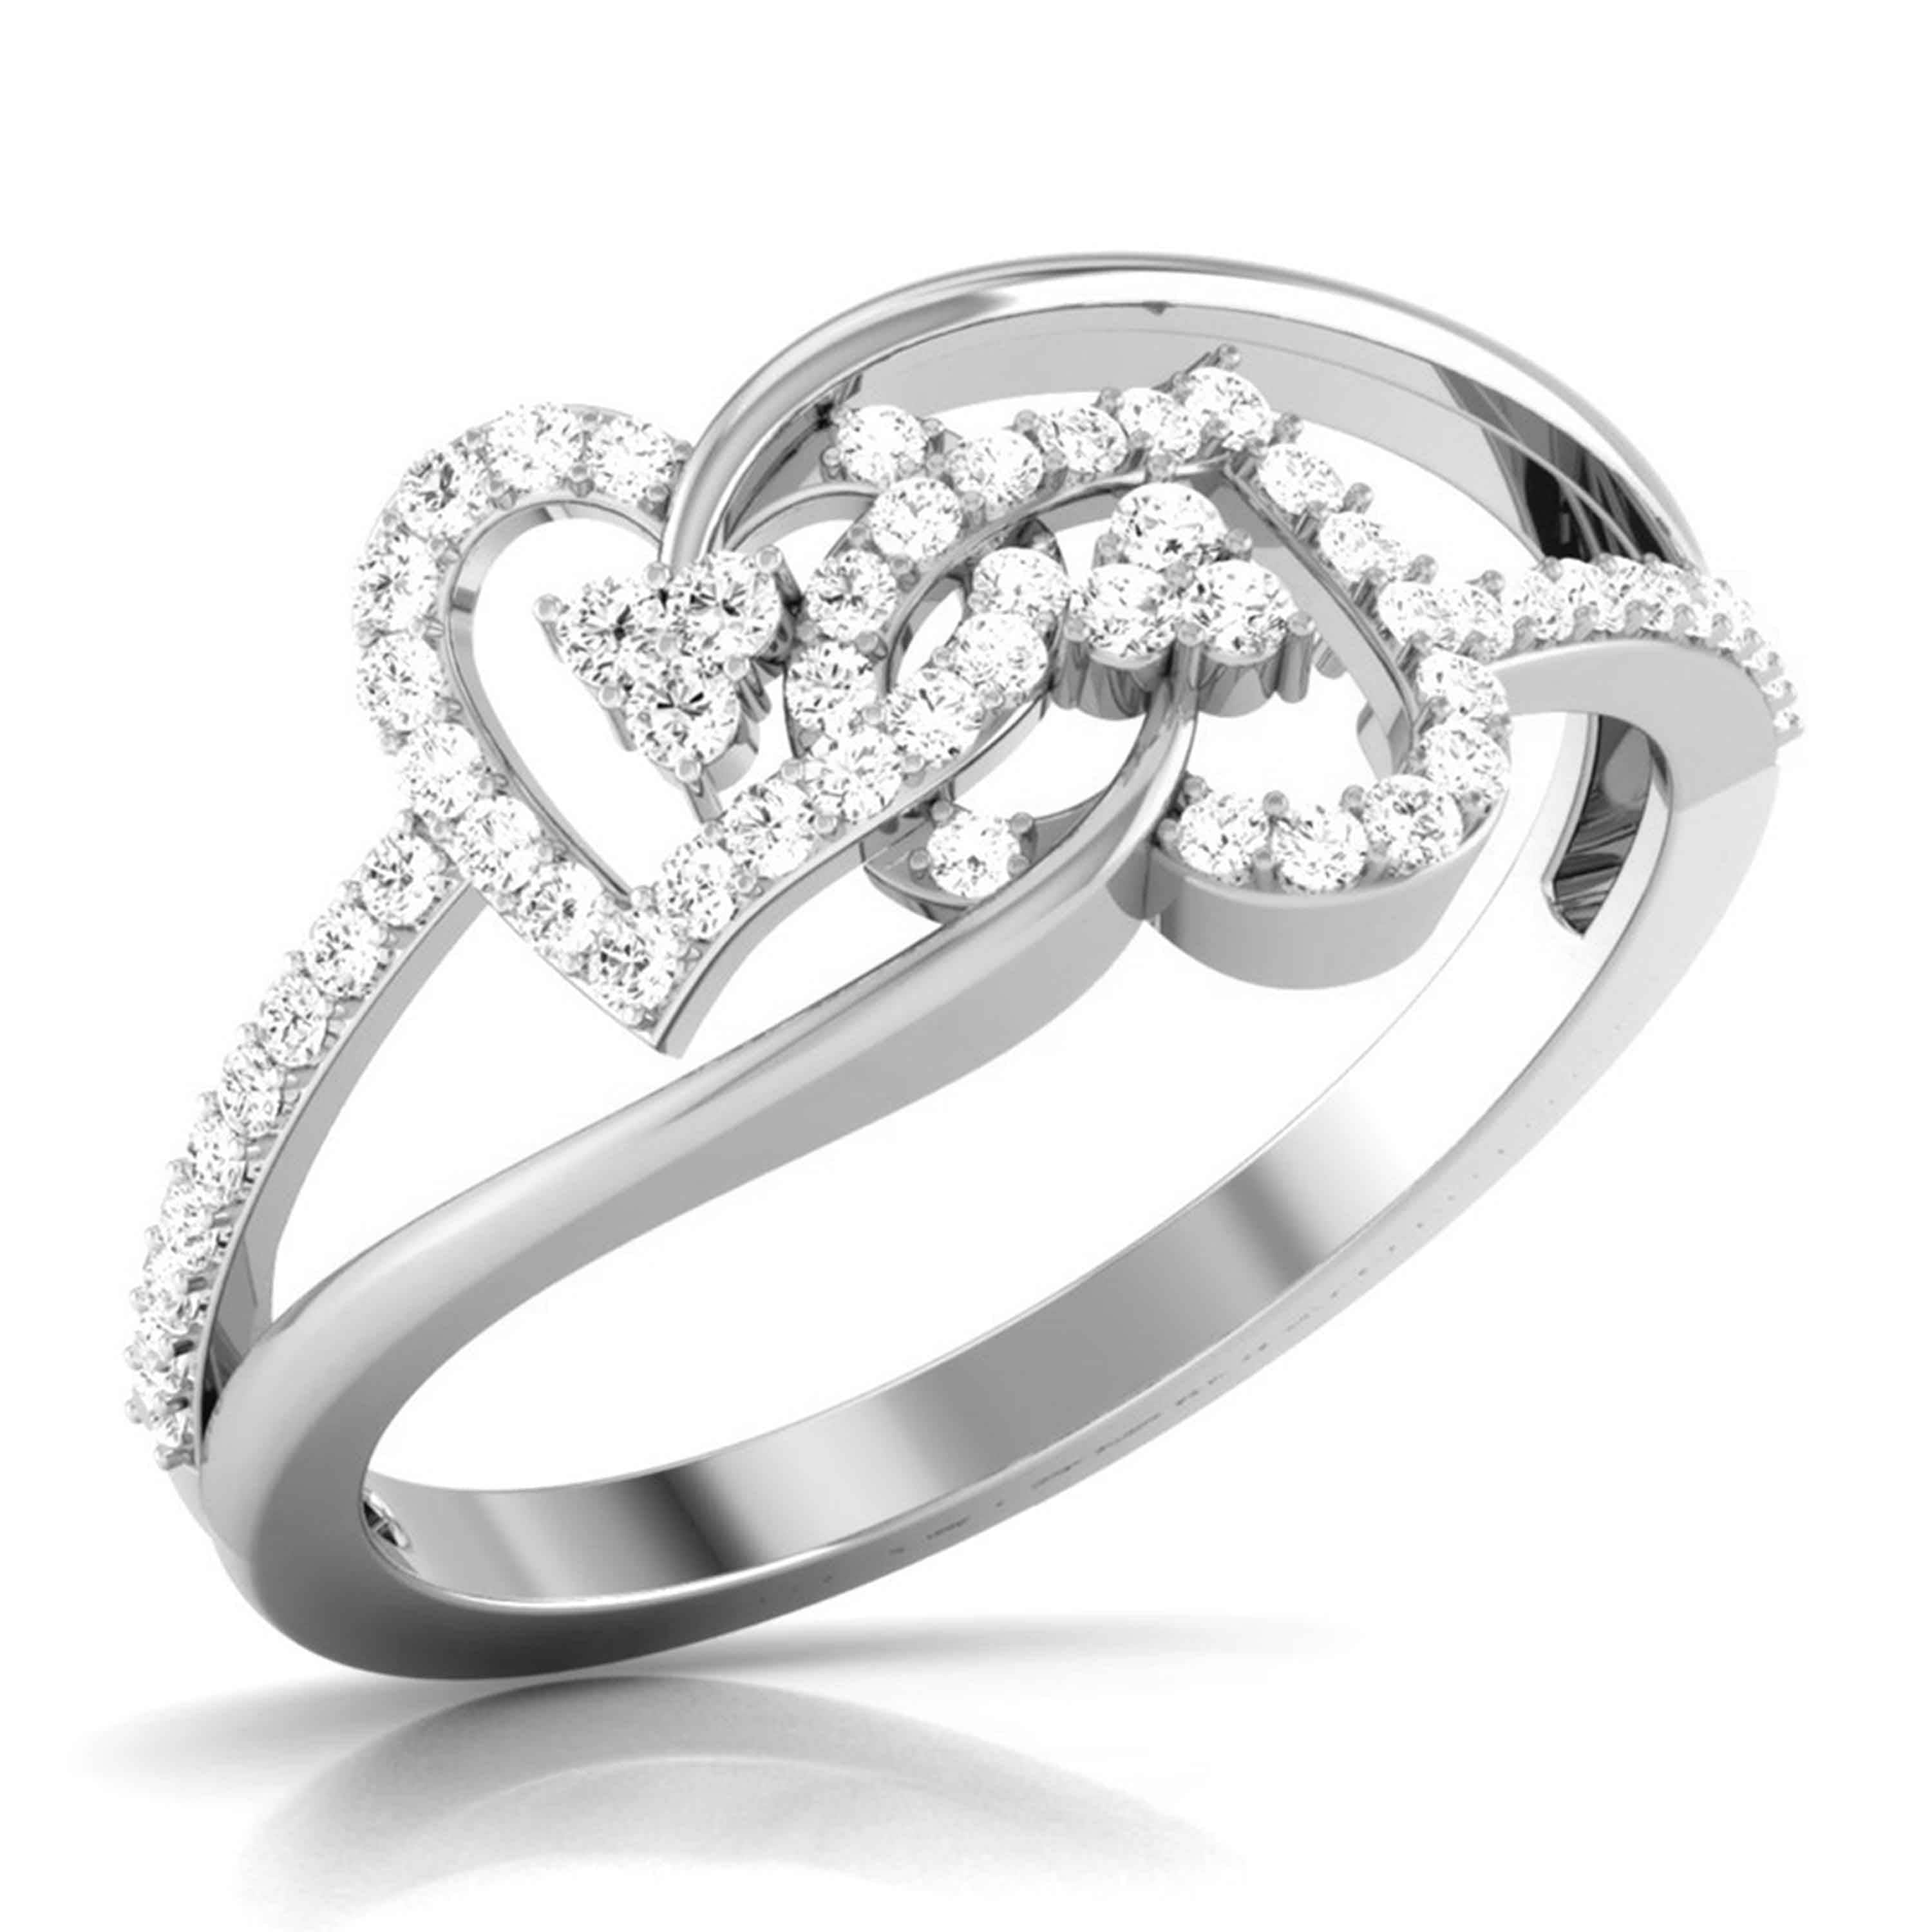 3 Carat Heart Shaped Diamond Engagement Rings | Ritani